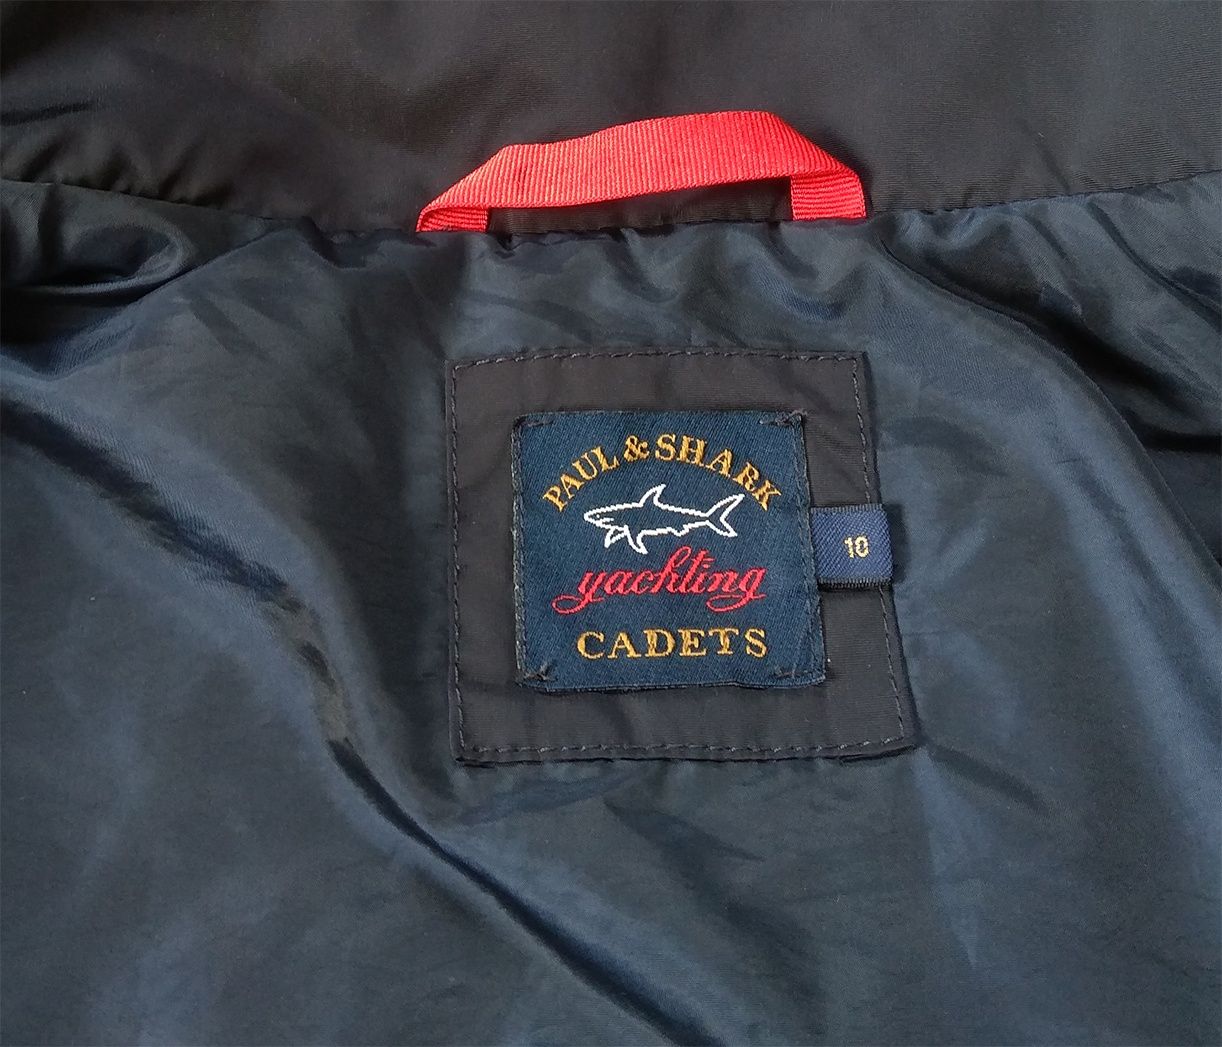 PAUL & SHARK Cadets детская куртка бомбер RiRi оригинал 140 см
#2